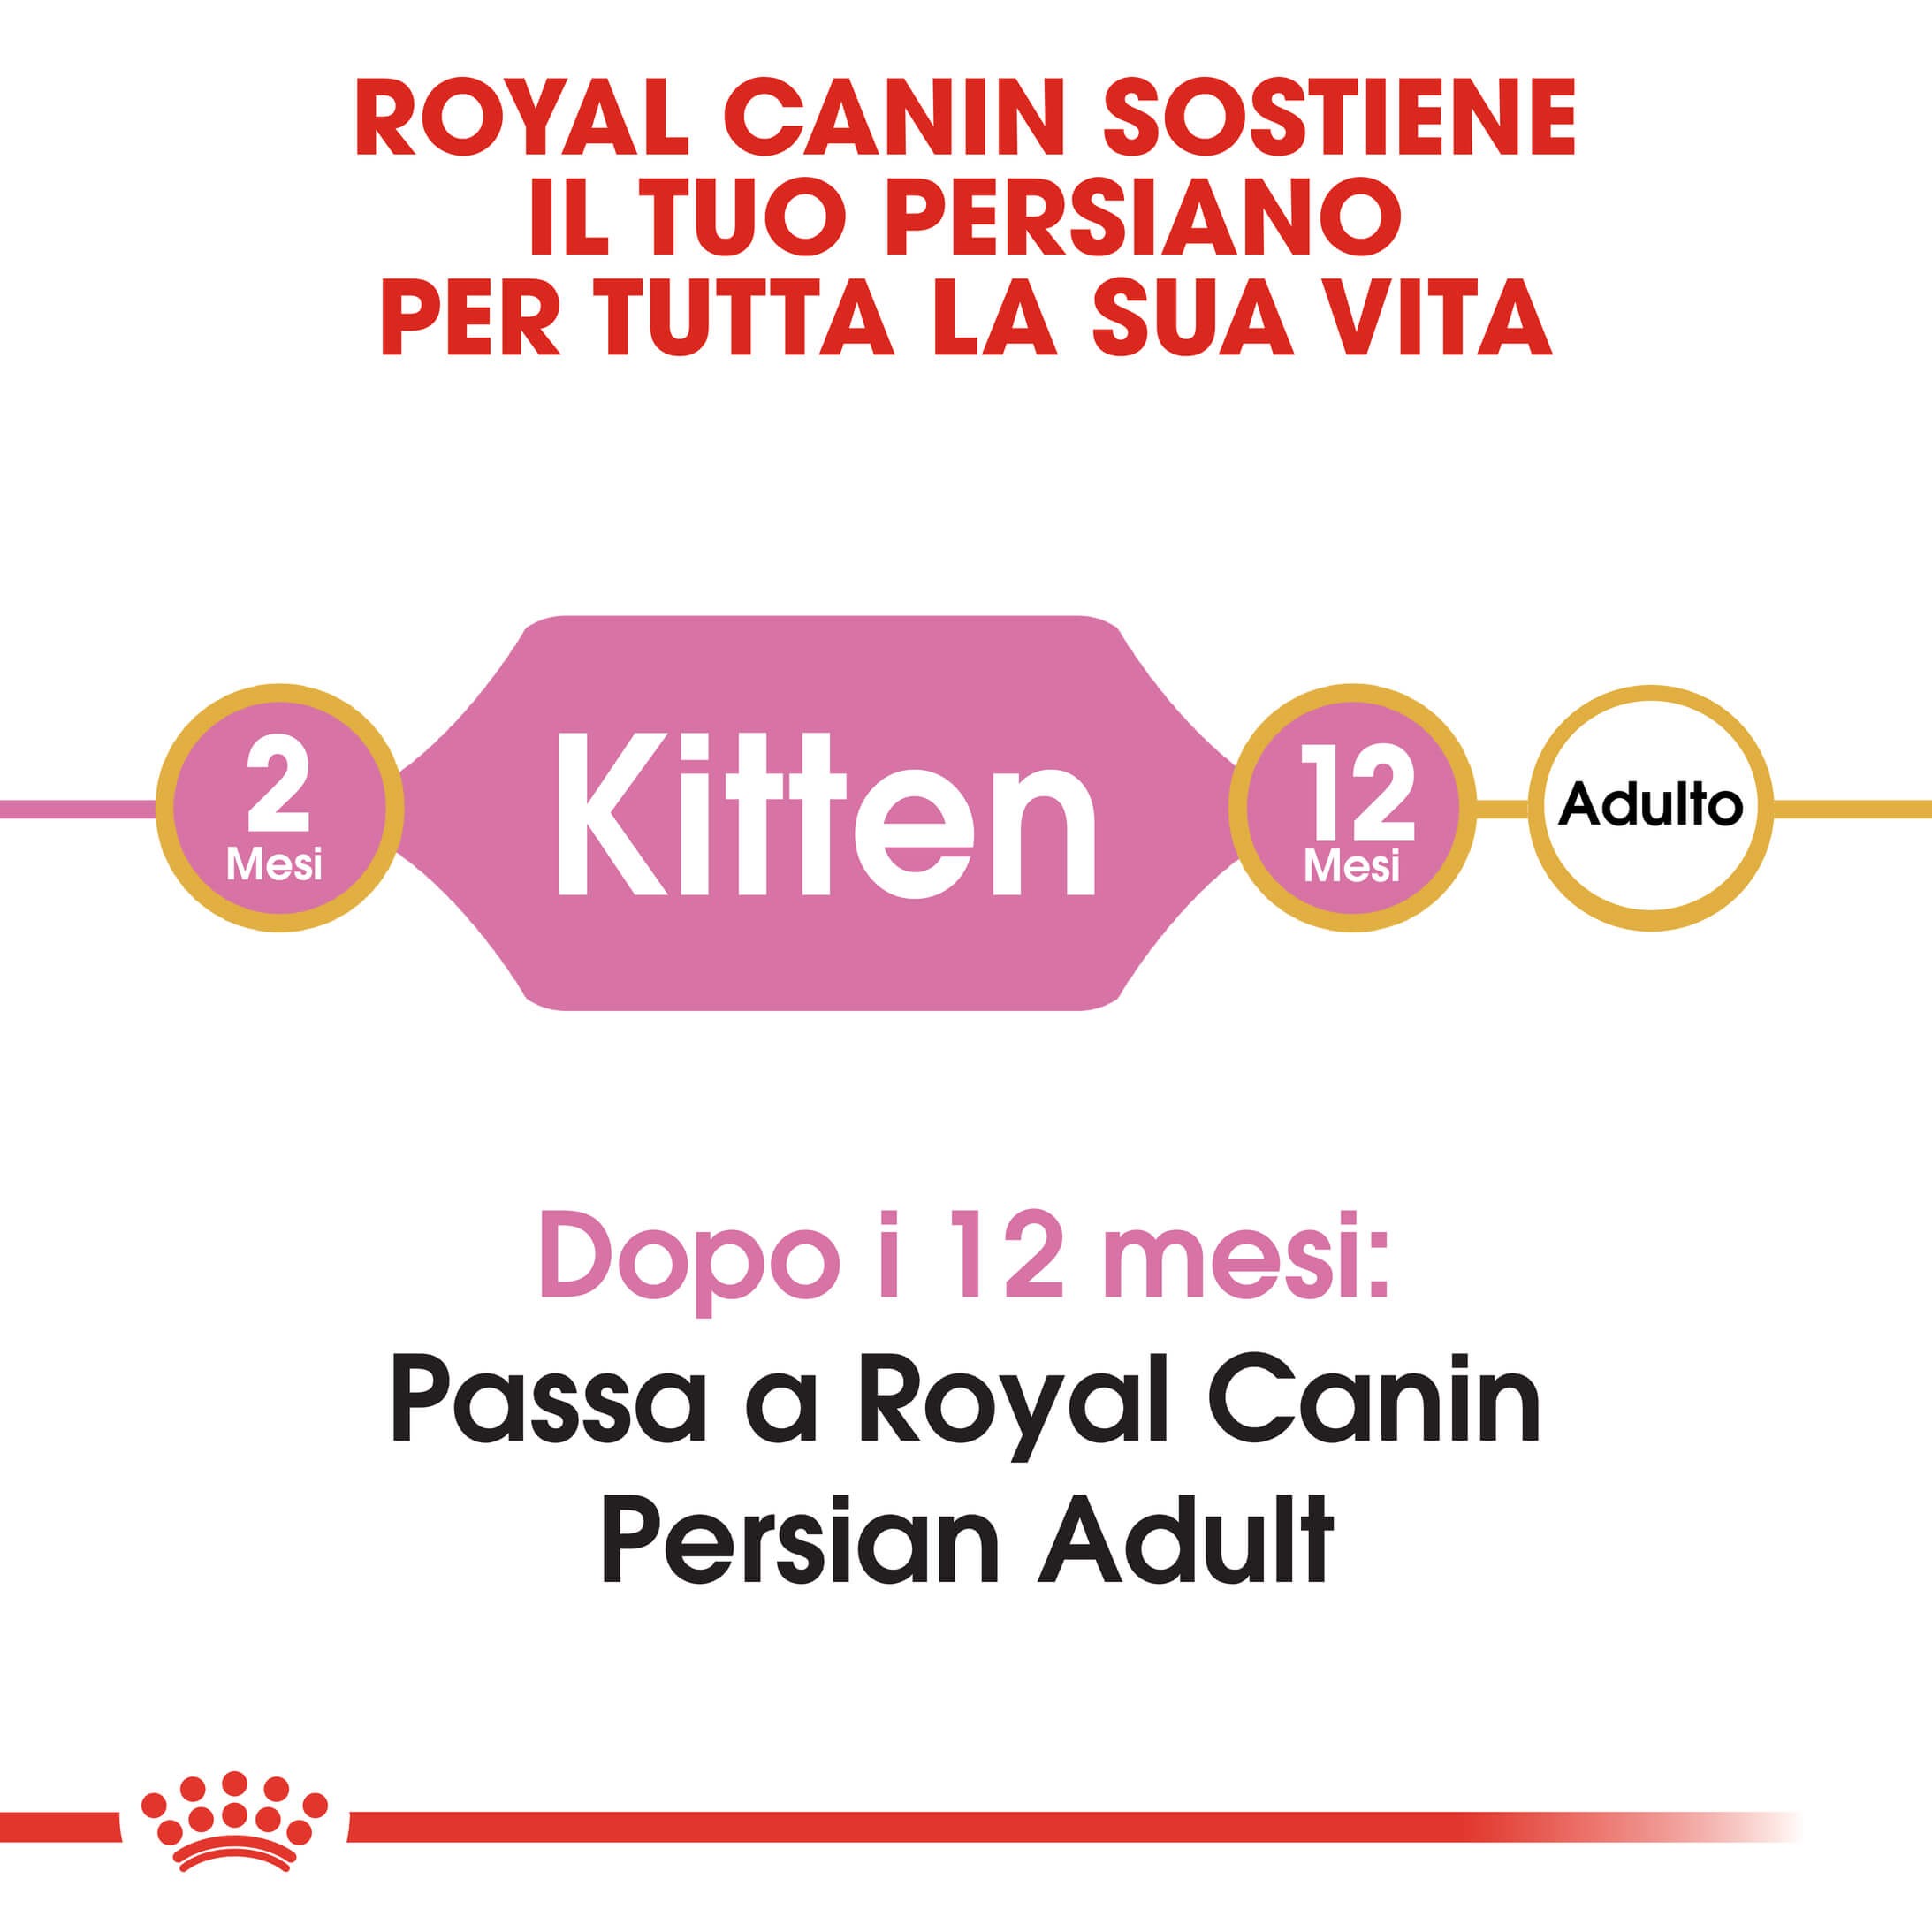 Royal Canin gattino Persiano